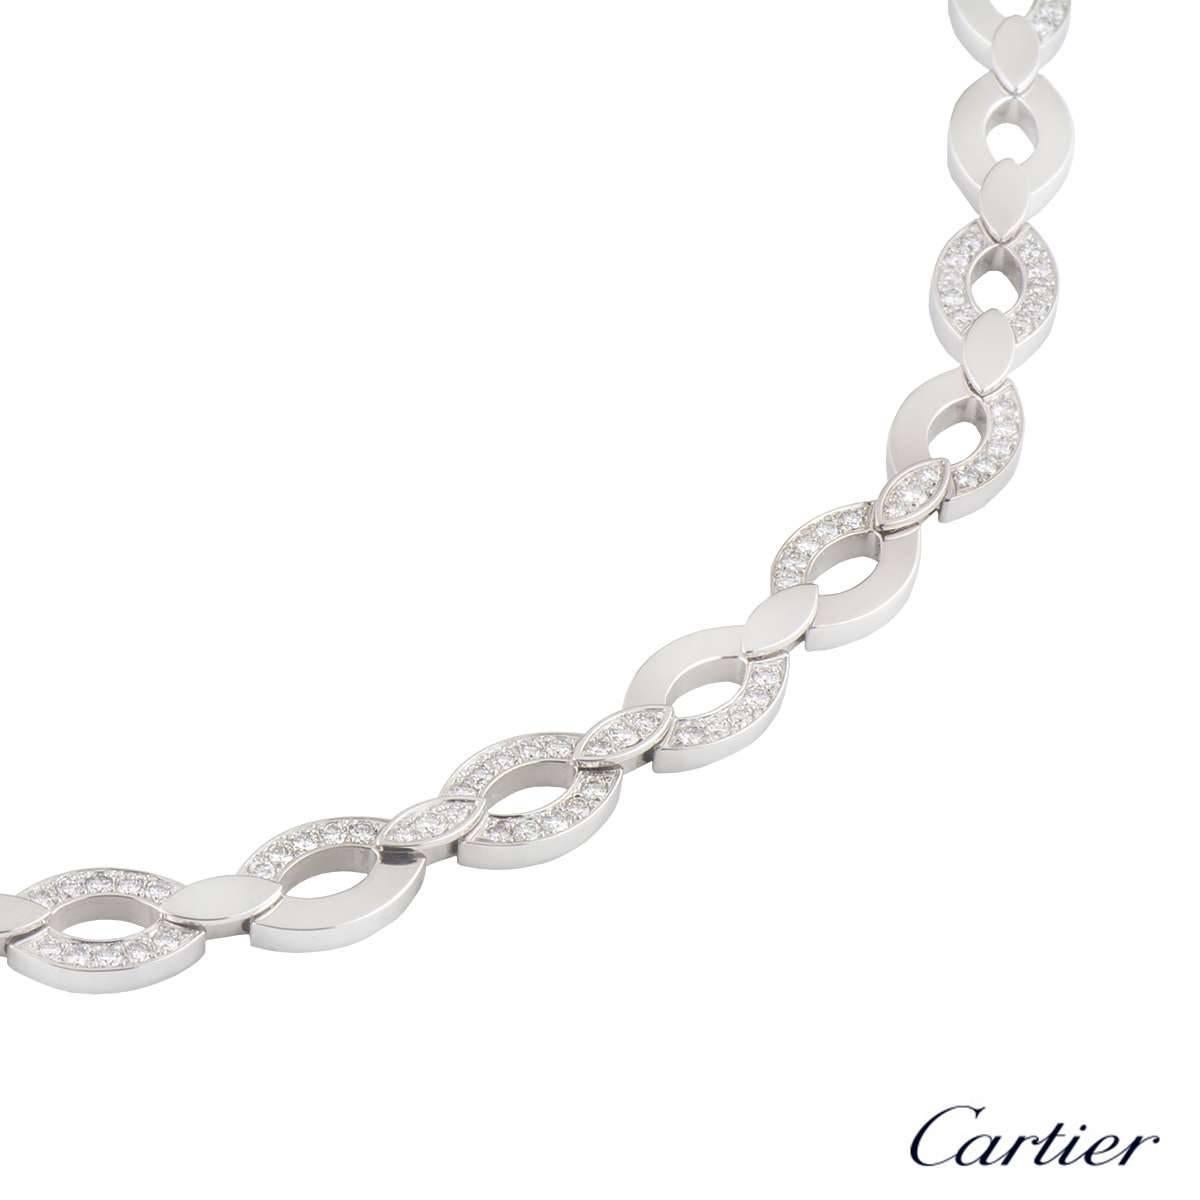 Women's Cartier Daidea Diamond Necklace, Bracelet and Earring Suite